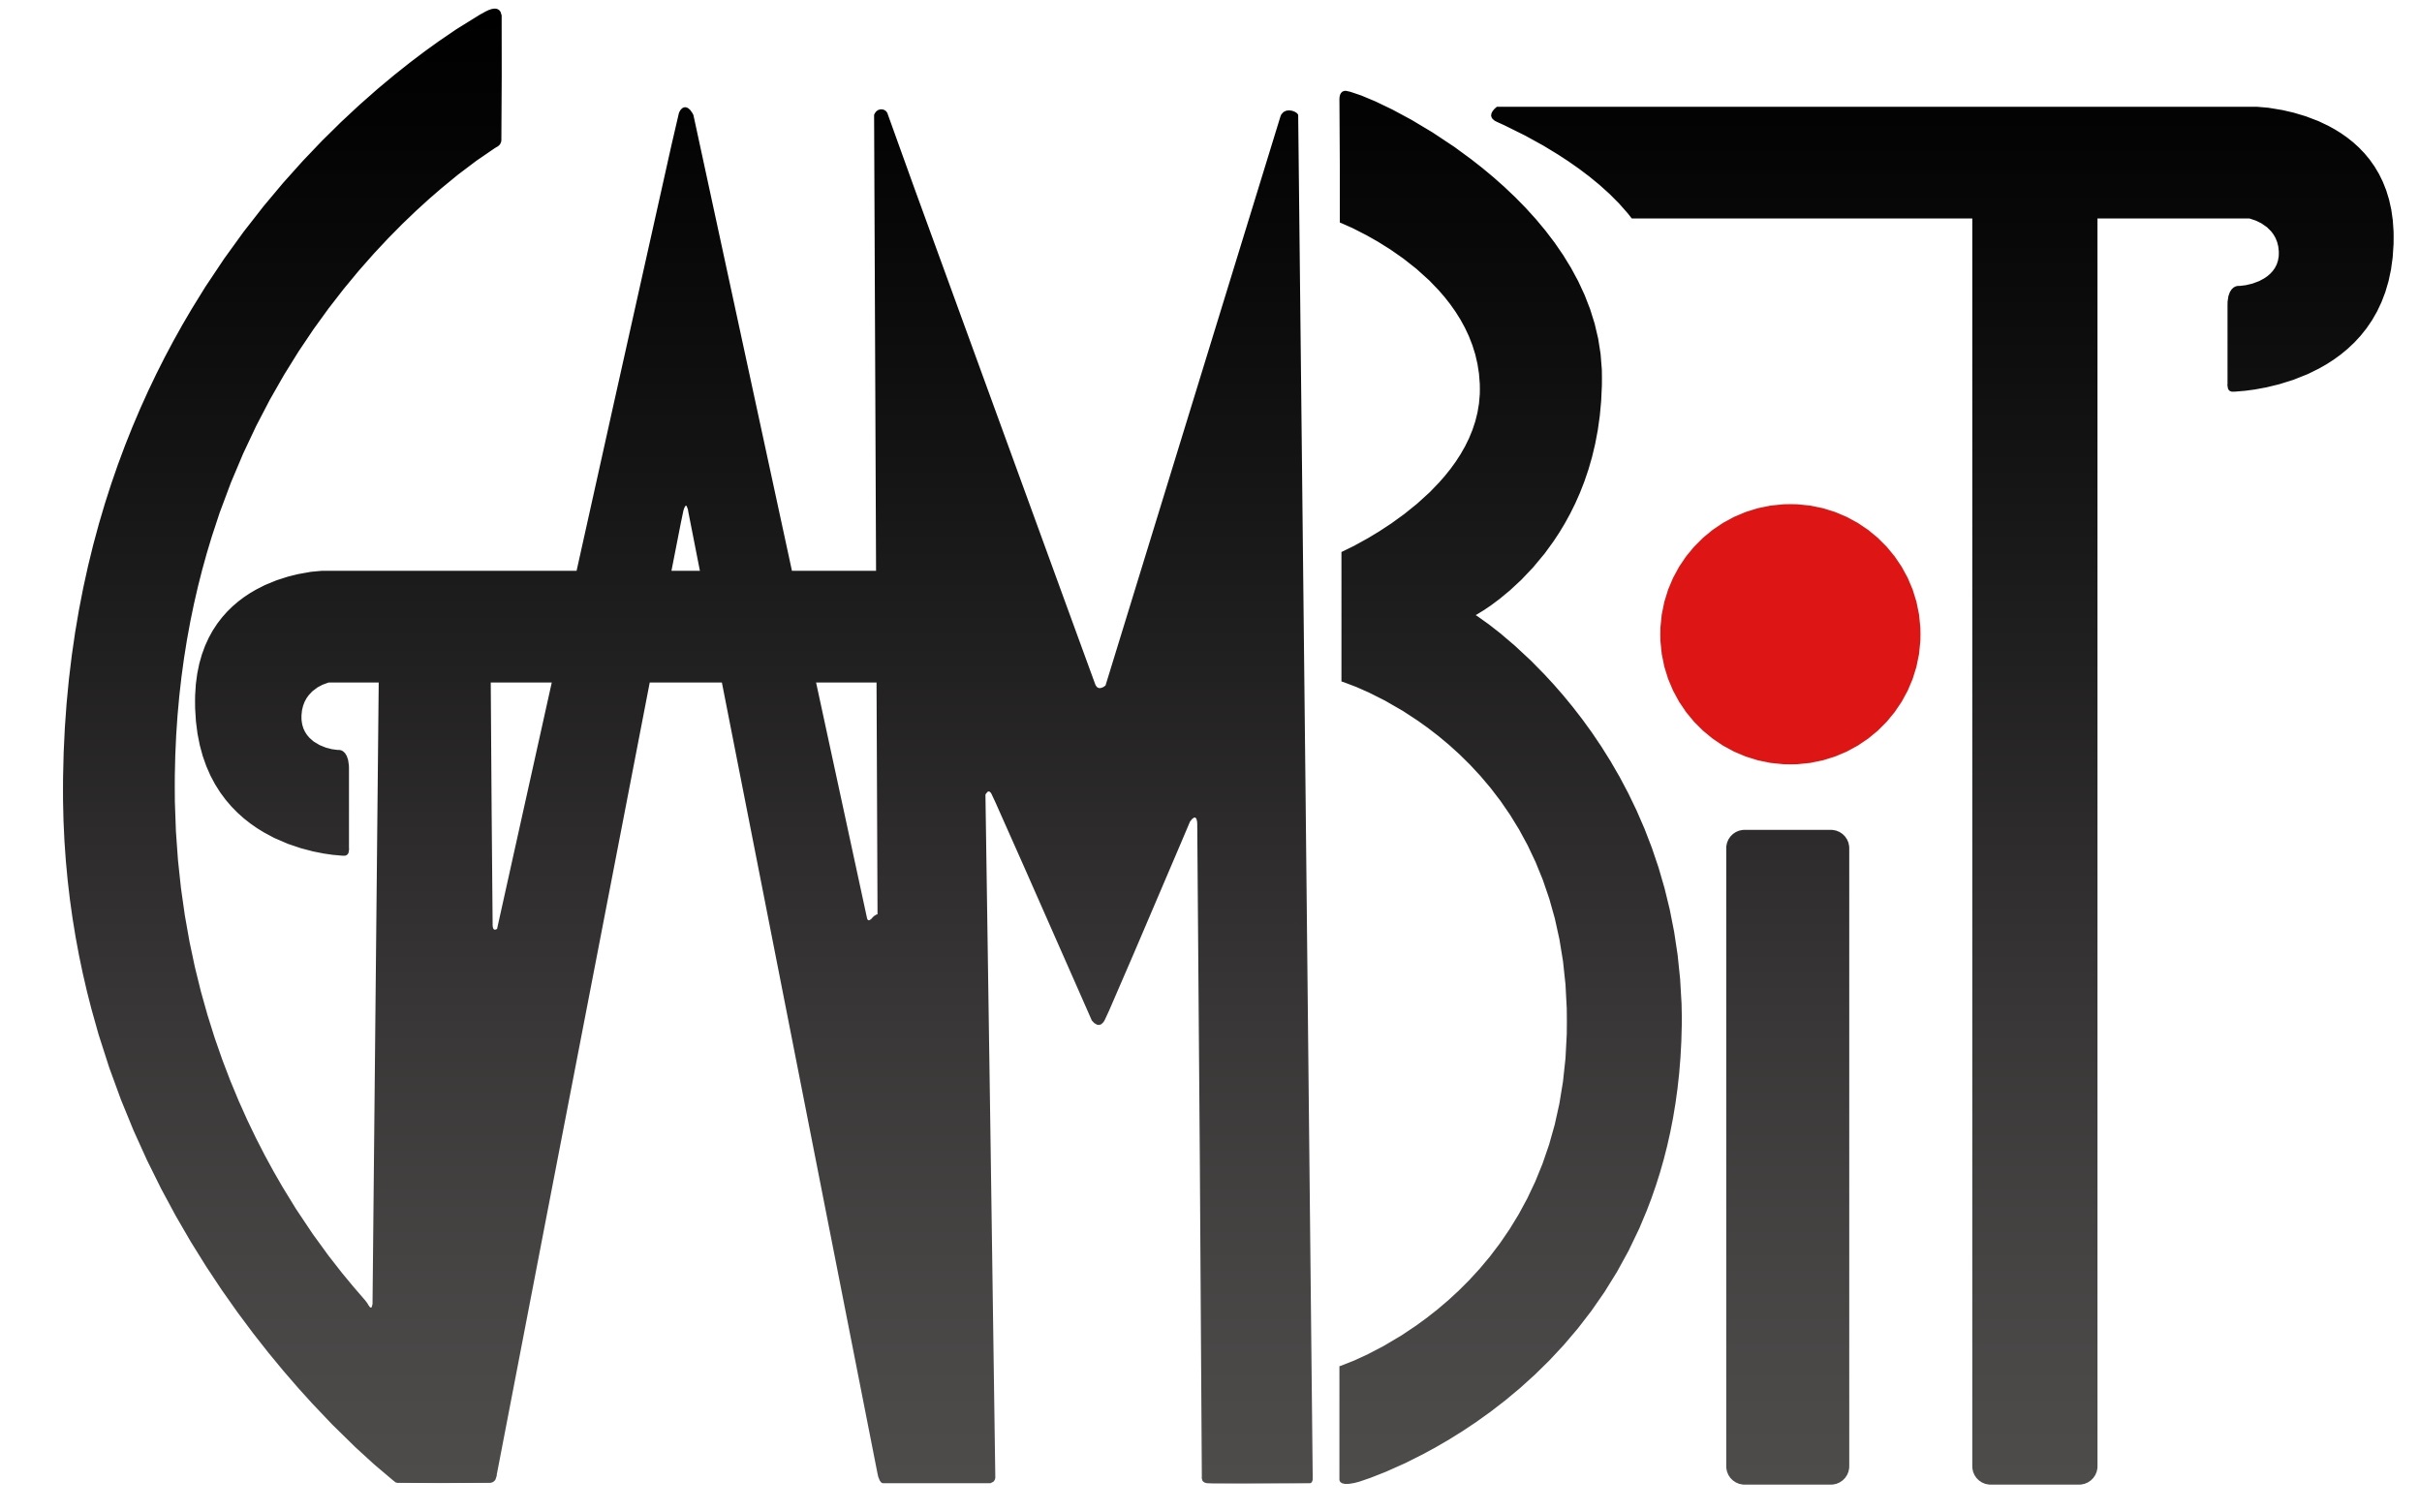 GAMBIT Logo.jpg f23778da2e55a1ebd806acc7008fa8c5